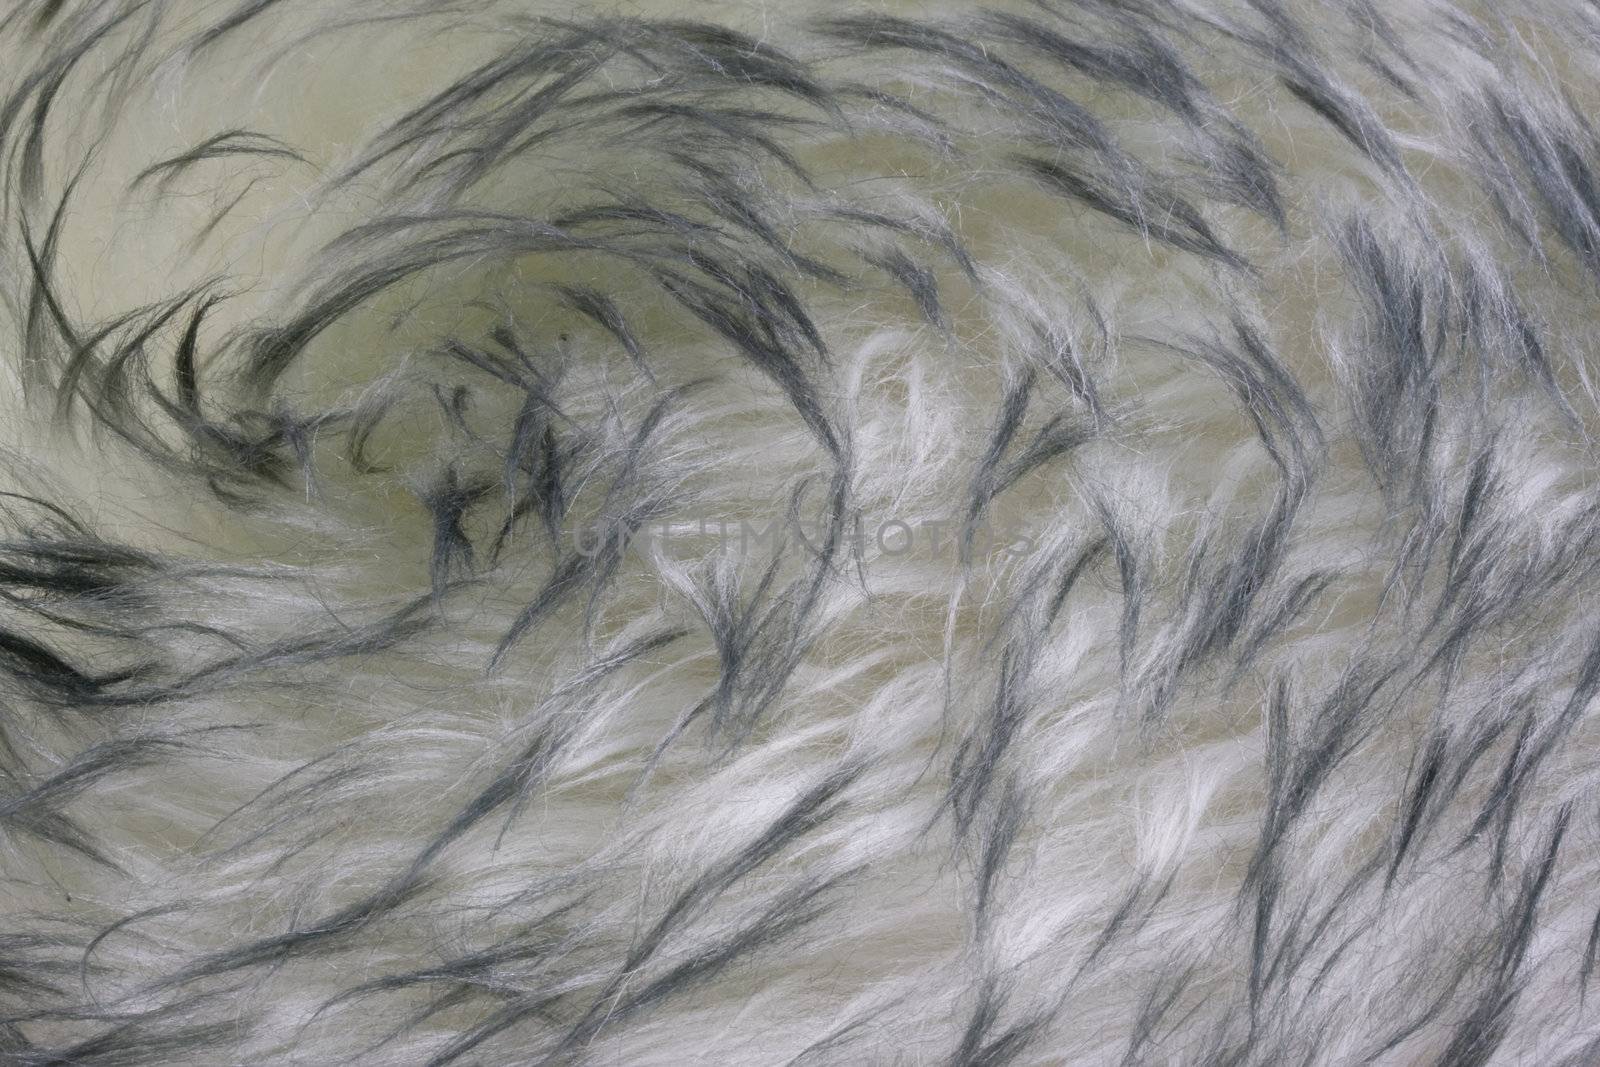 lambskin - fur background with a vortex pattern by PixelsAway